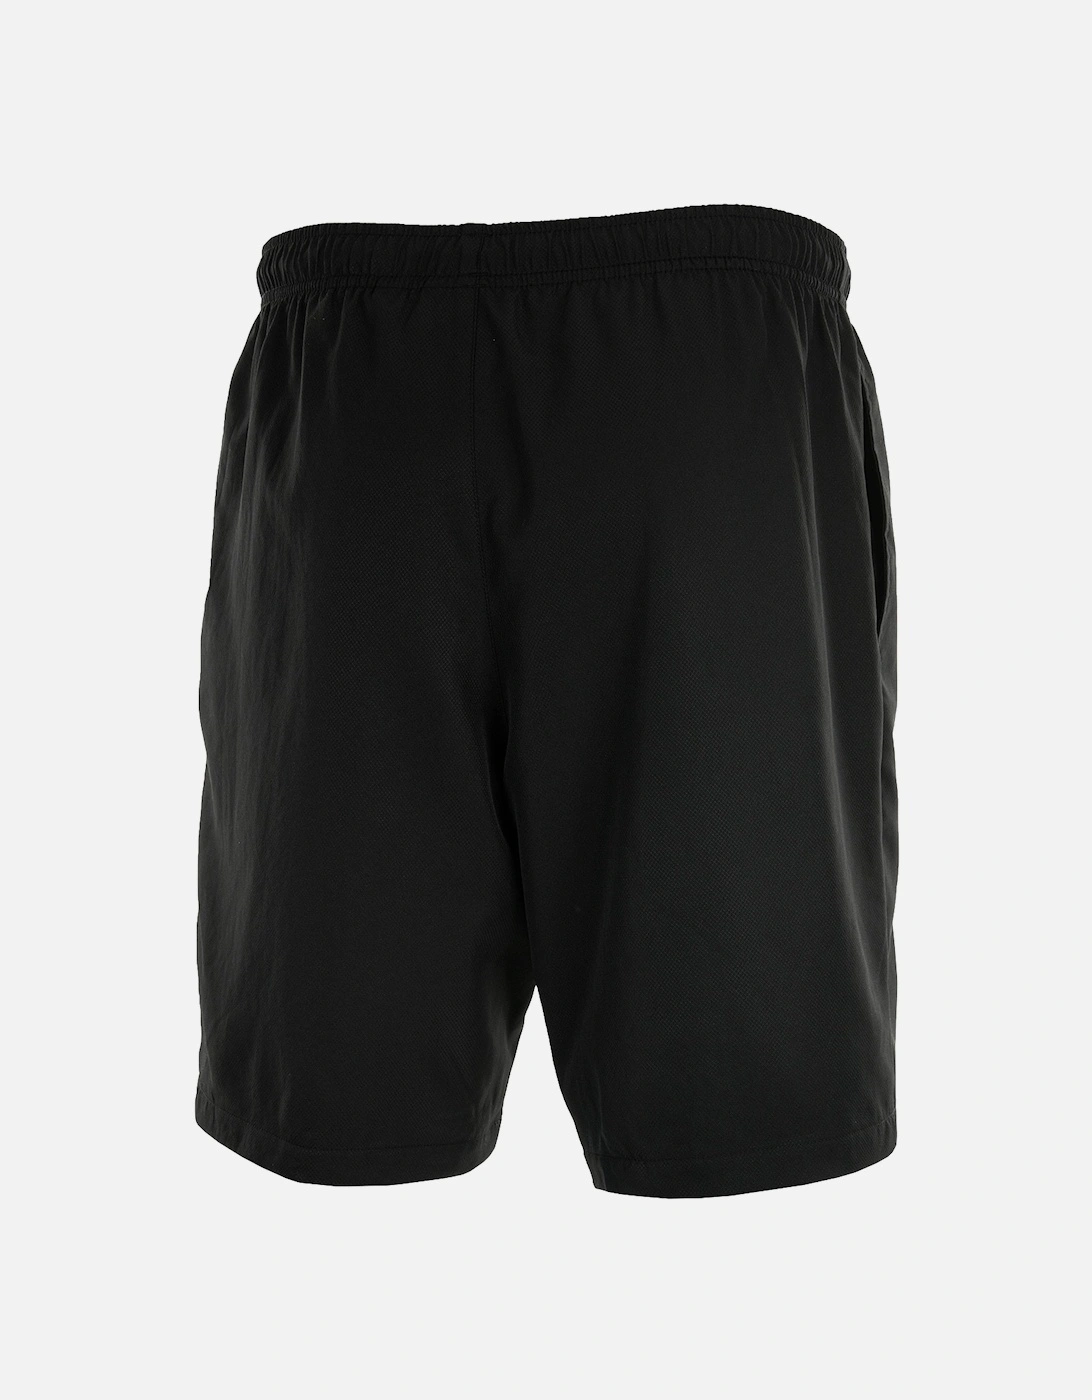 Sport Mens Shorts (Black)